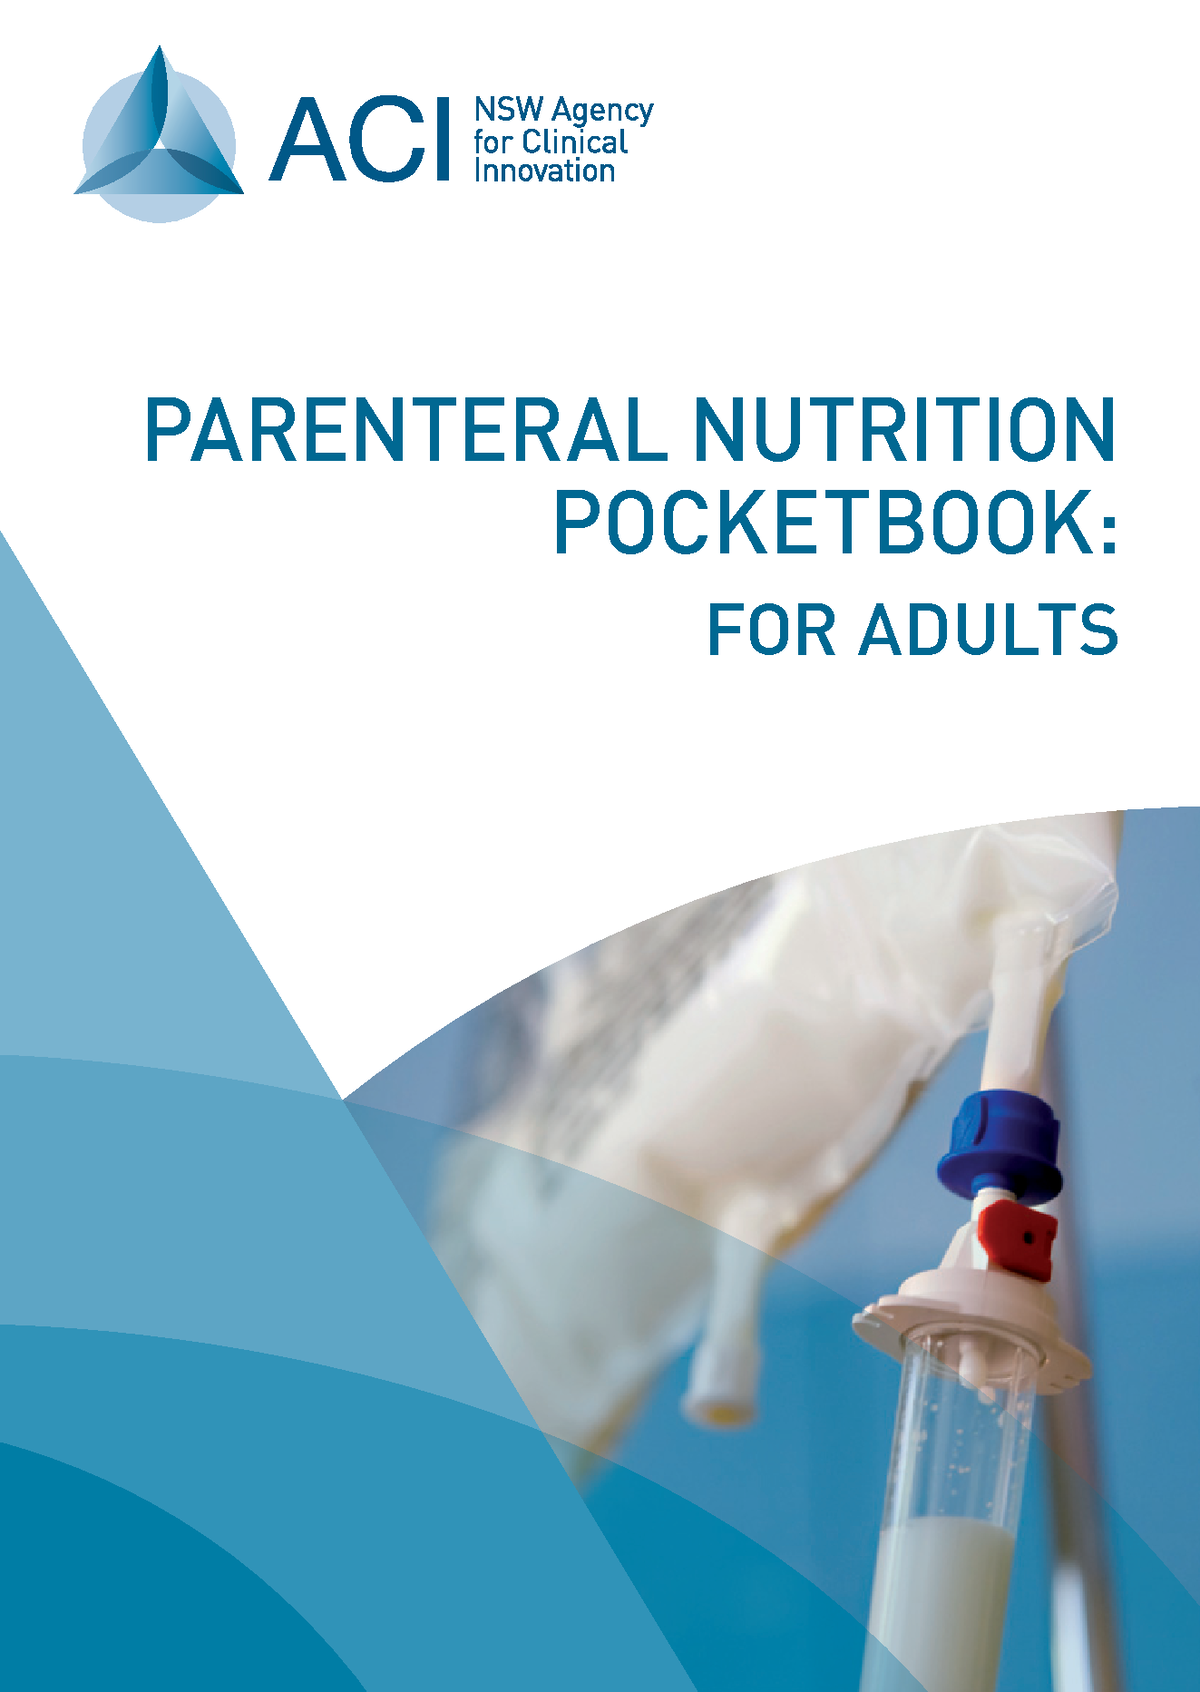 parenteral nutrition pb - Bsc.nursing - RGUHS - Studocu